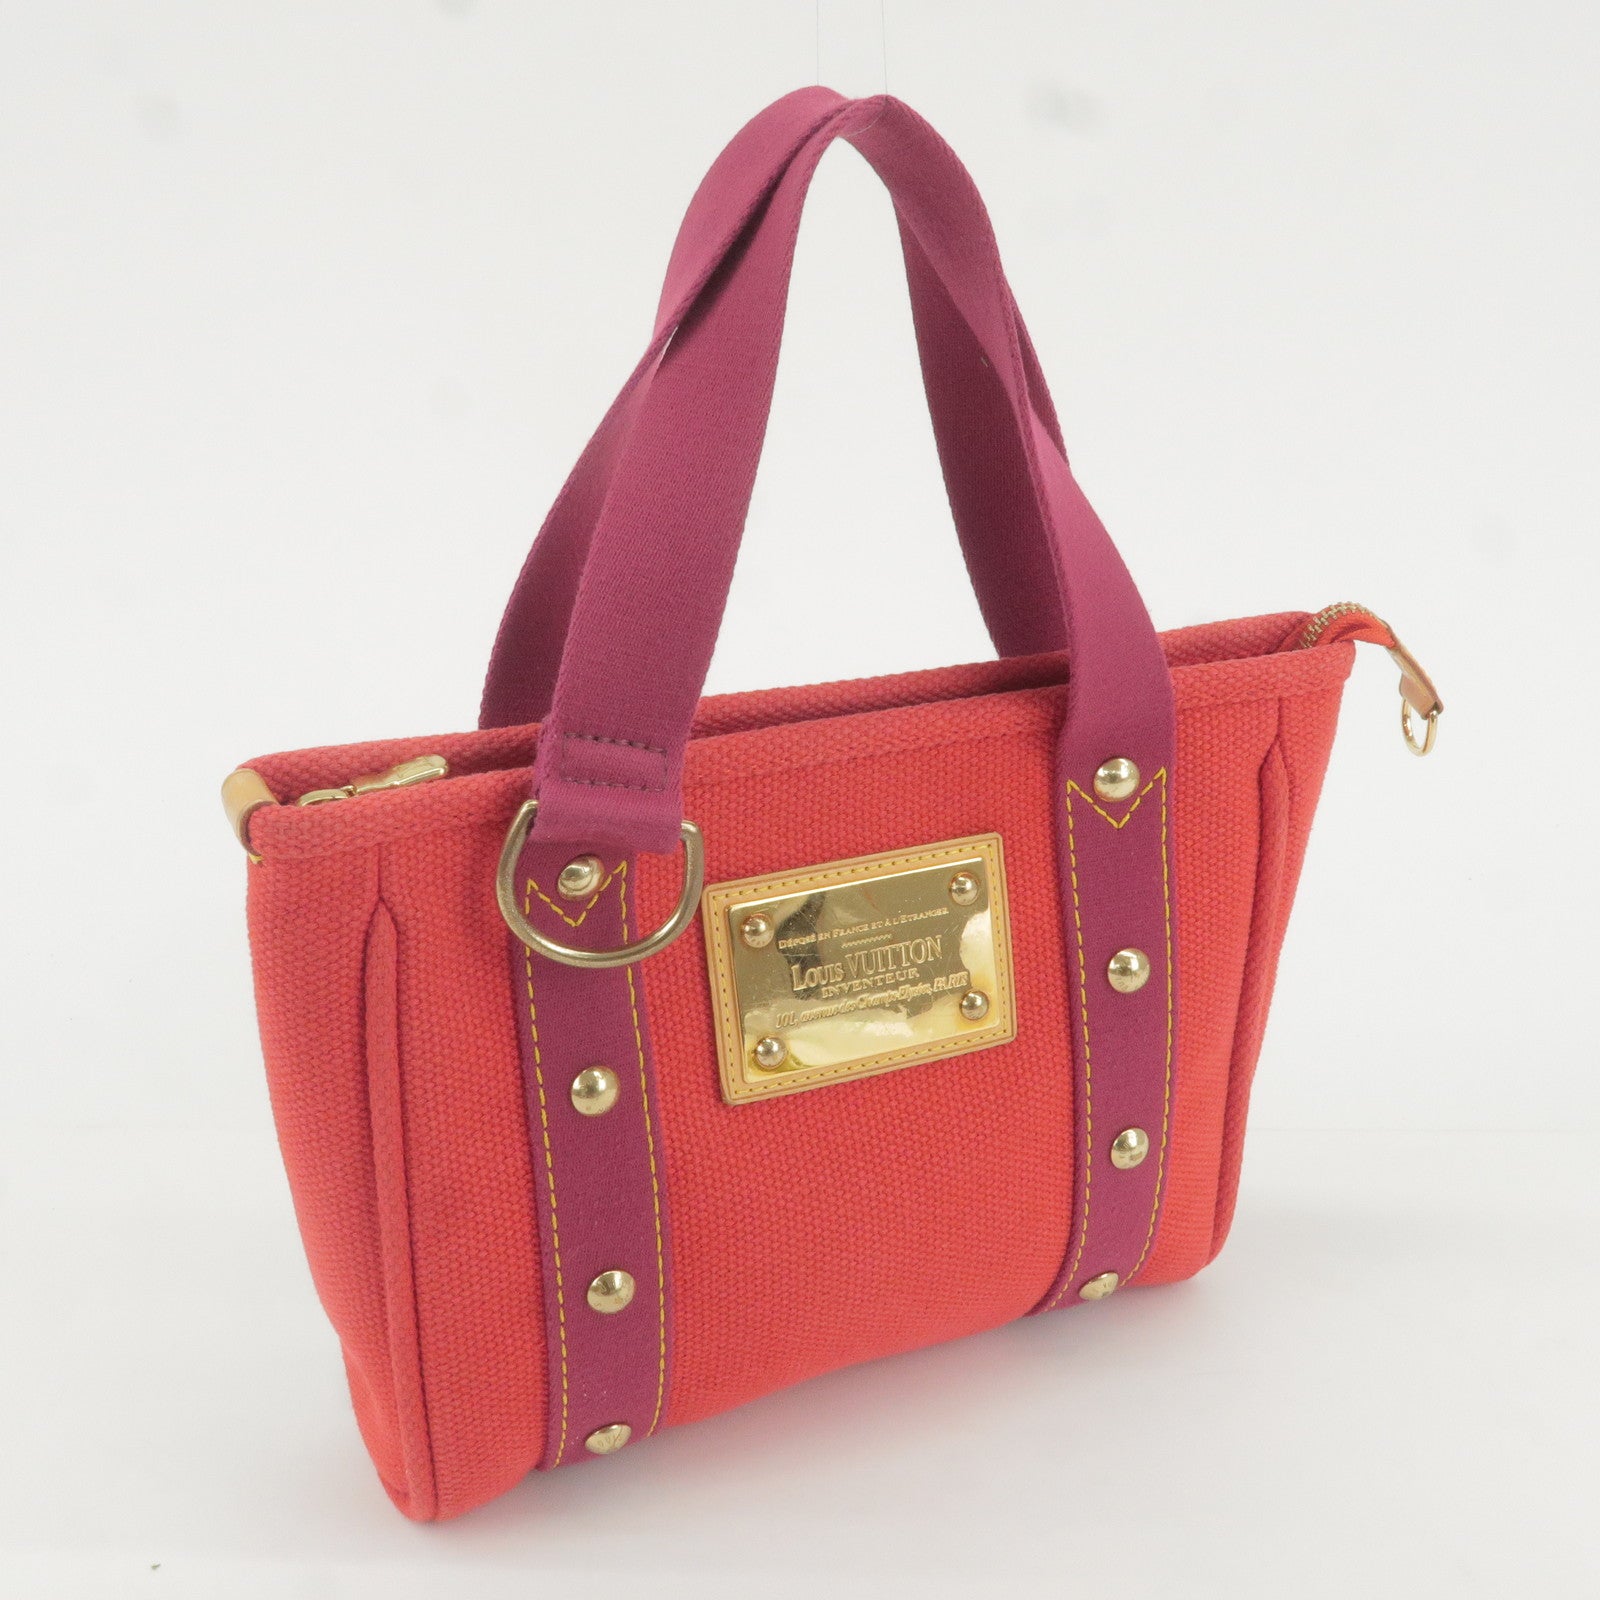 Louis Vuitton Inventeur Bag w/ Red Suede Interior